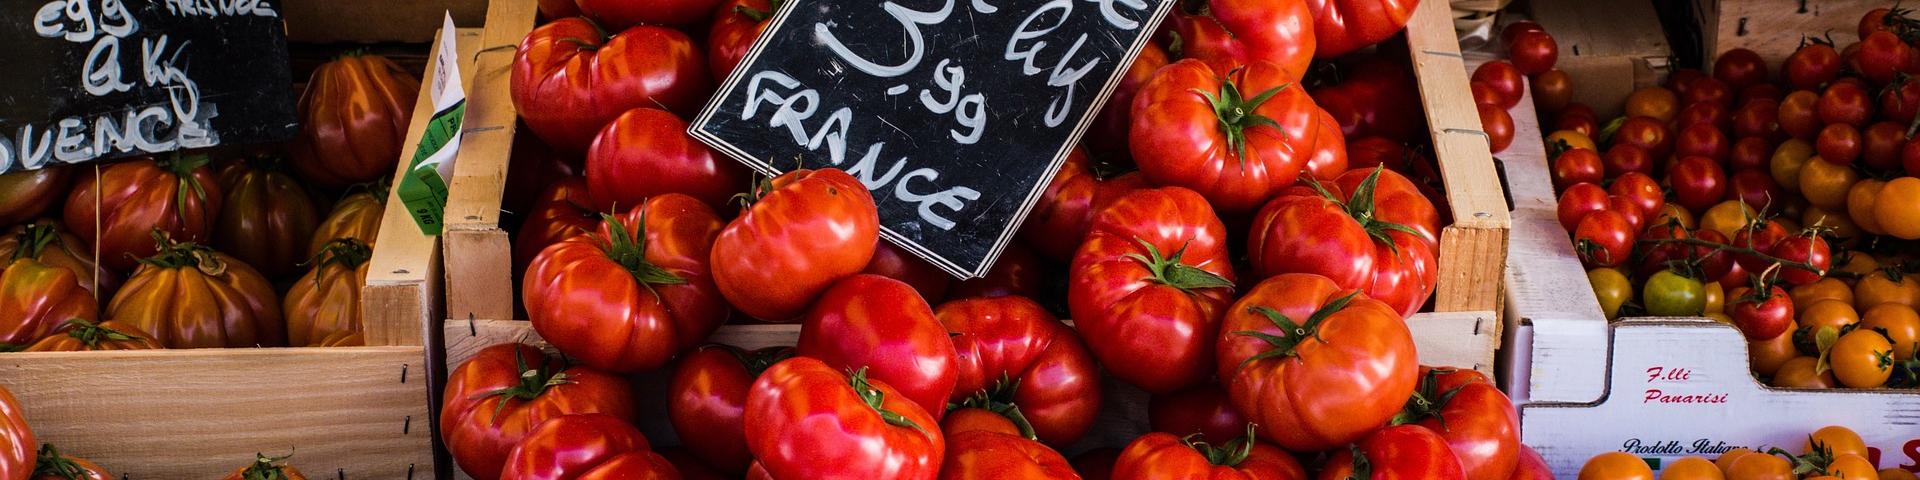 banner3_tomatoes-4050245_1920_via-pixabay